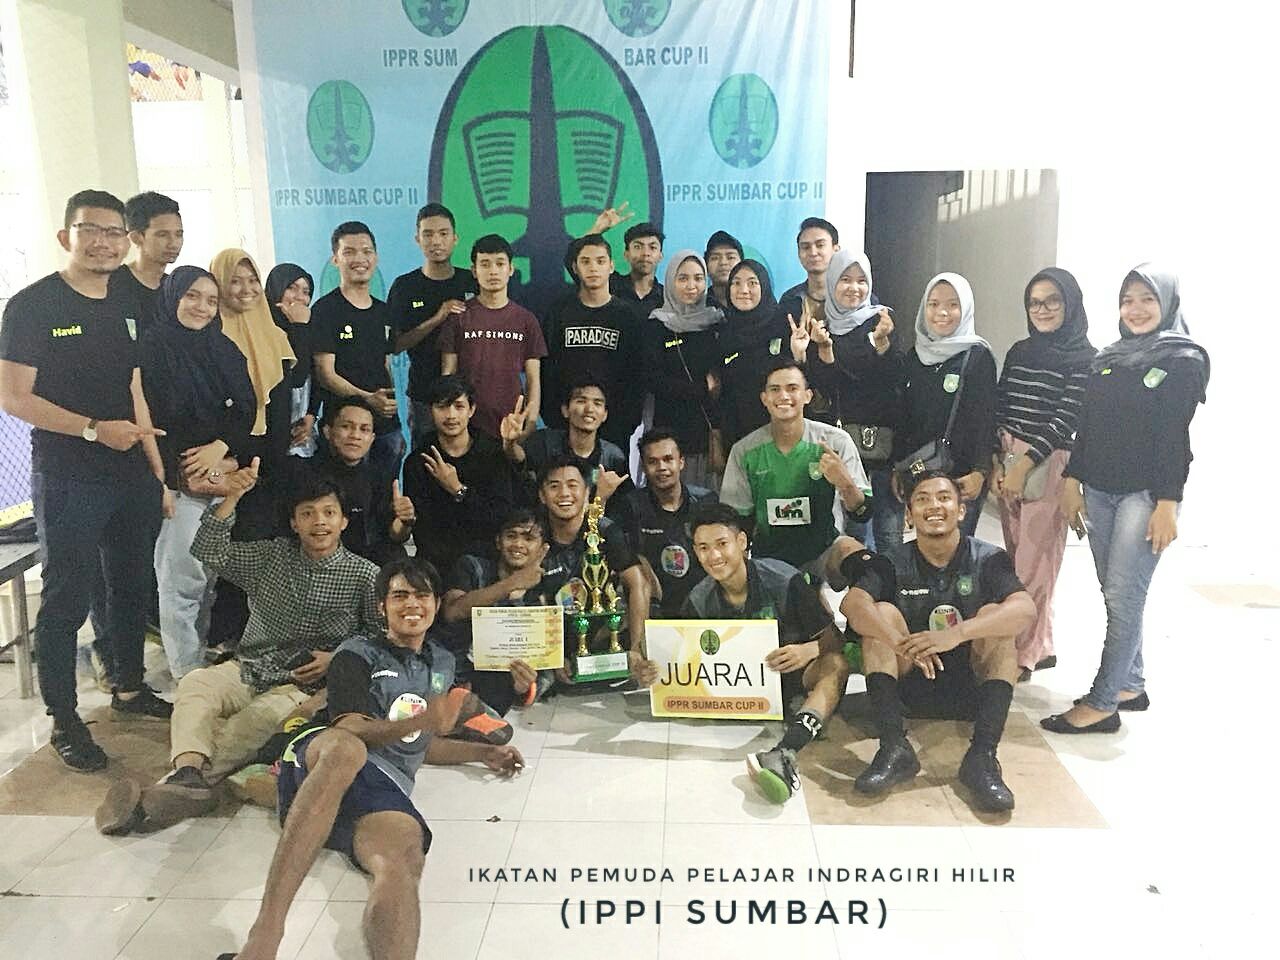 IPPI Sumbar Juara1 Turnamen IPPR Cup II